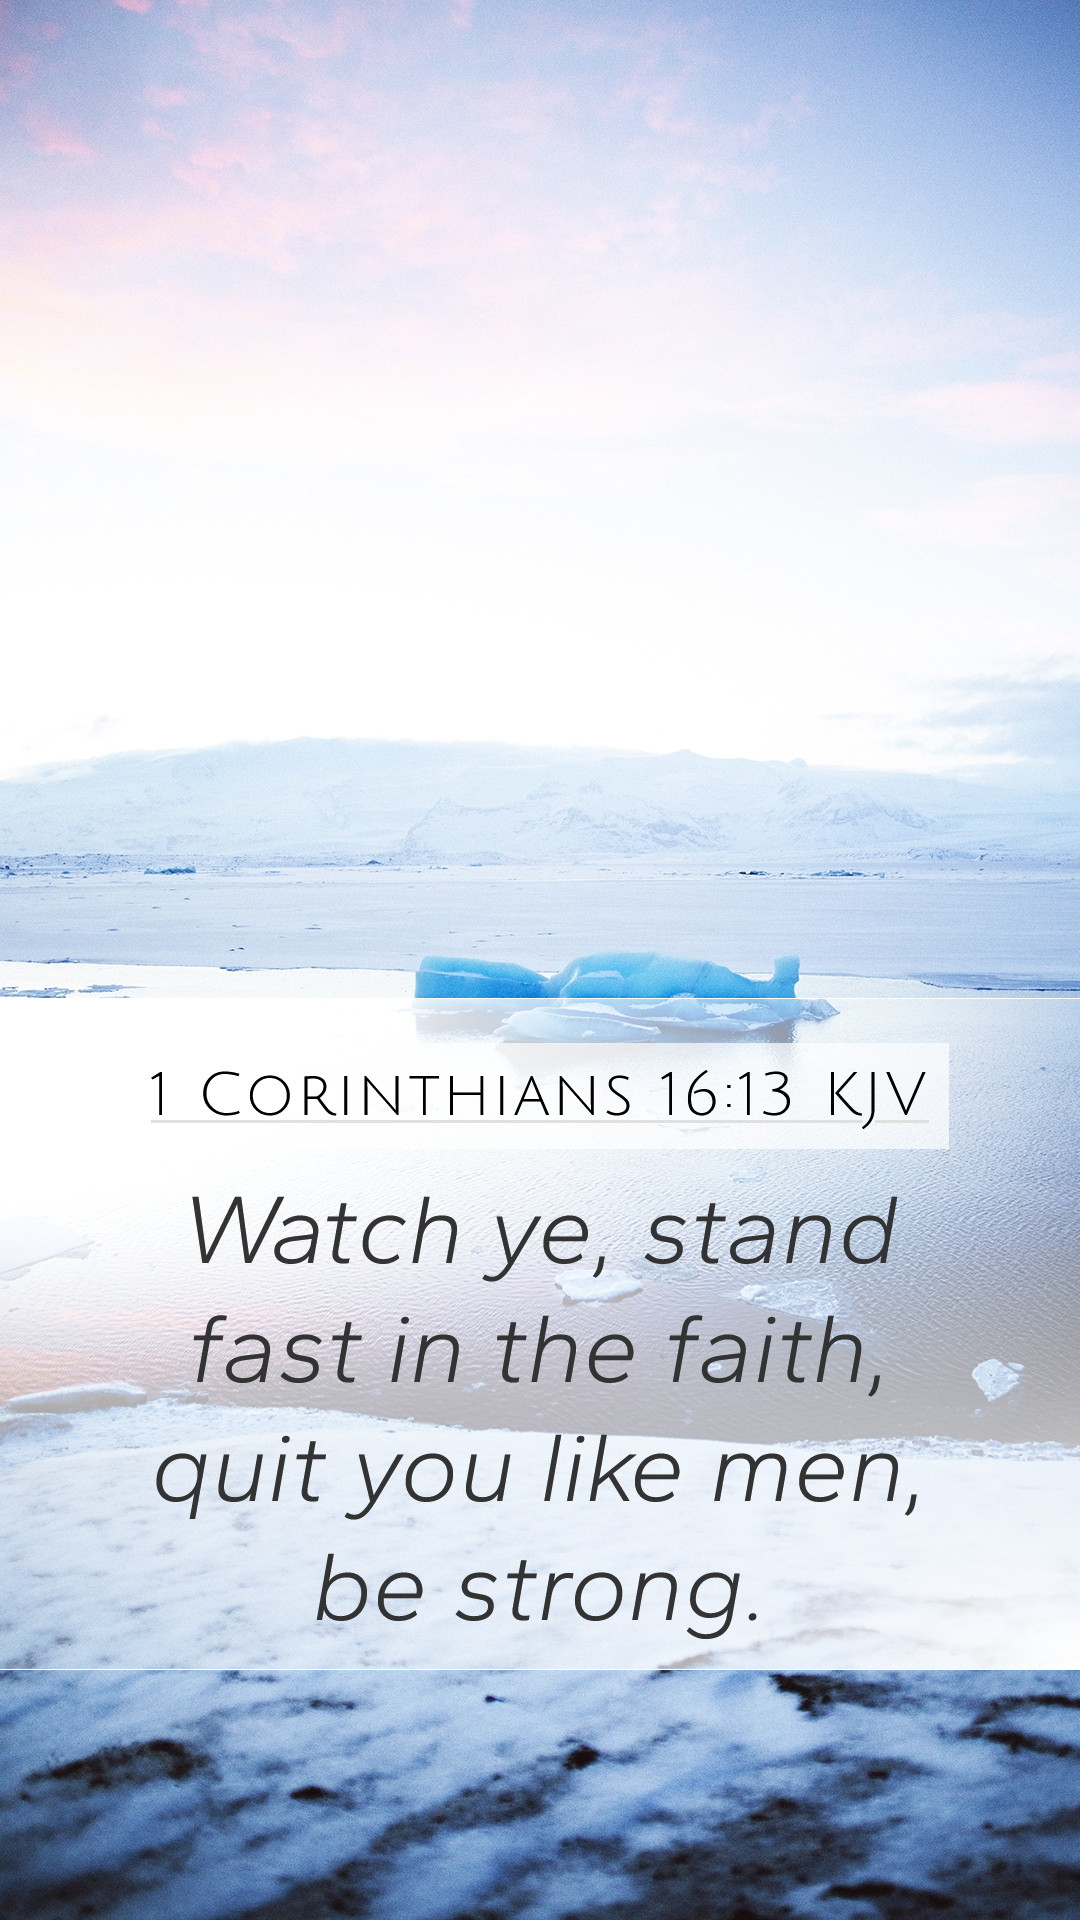 Corinthians 16:13 KJV Mobile Phone Wallpaper ye, stand fast in the faith, quit you like